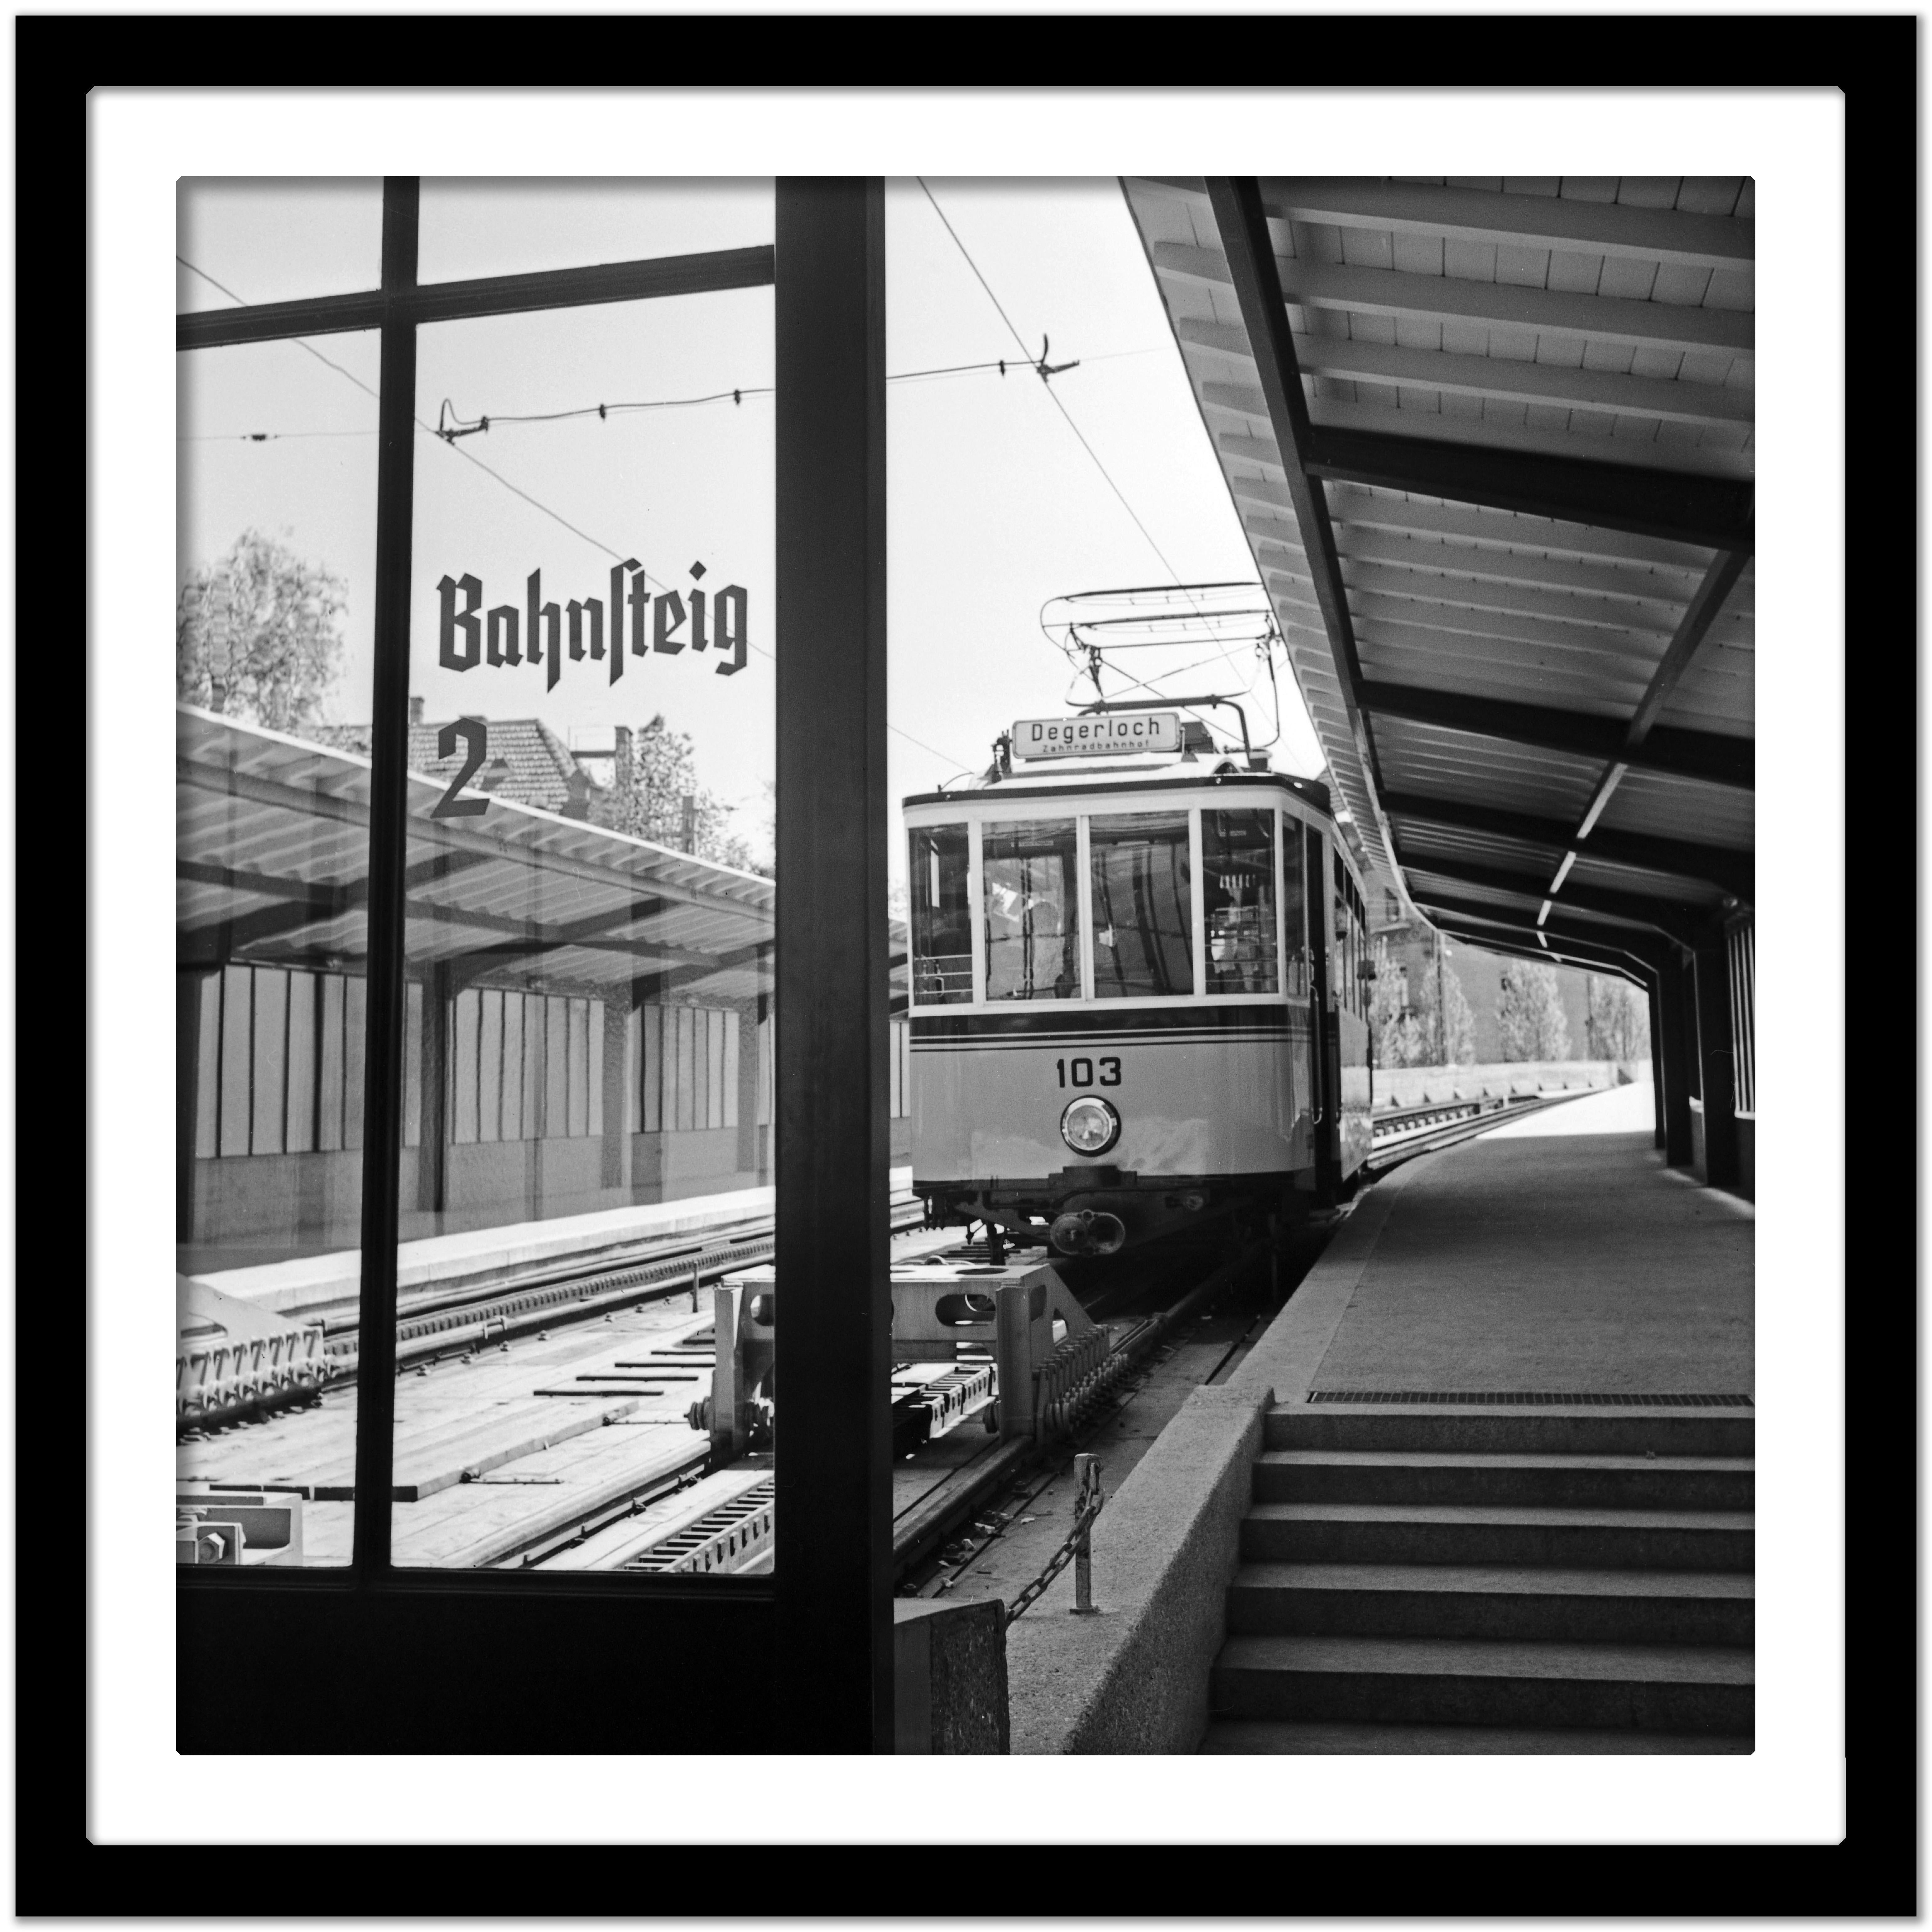 Train to Degerloch waiting at platform, Stuttgart Germany 1935, Printed Later - Black Black and White Photograph by Karl Heinrich Lämmel